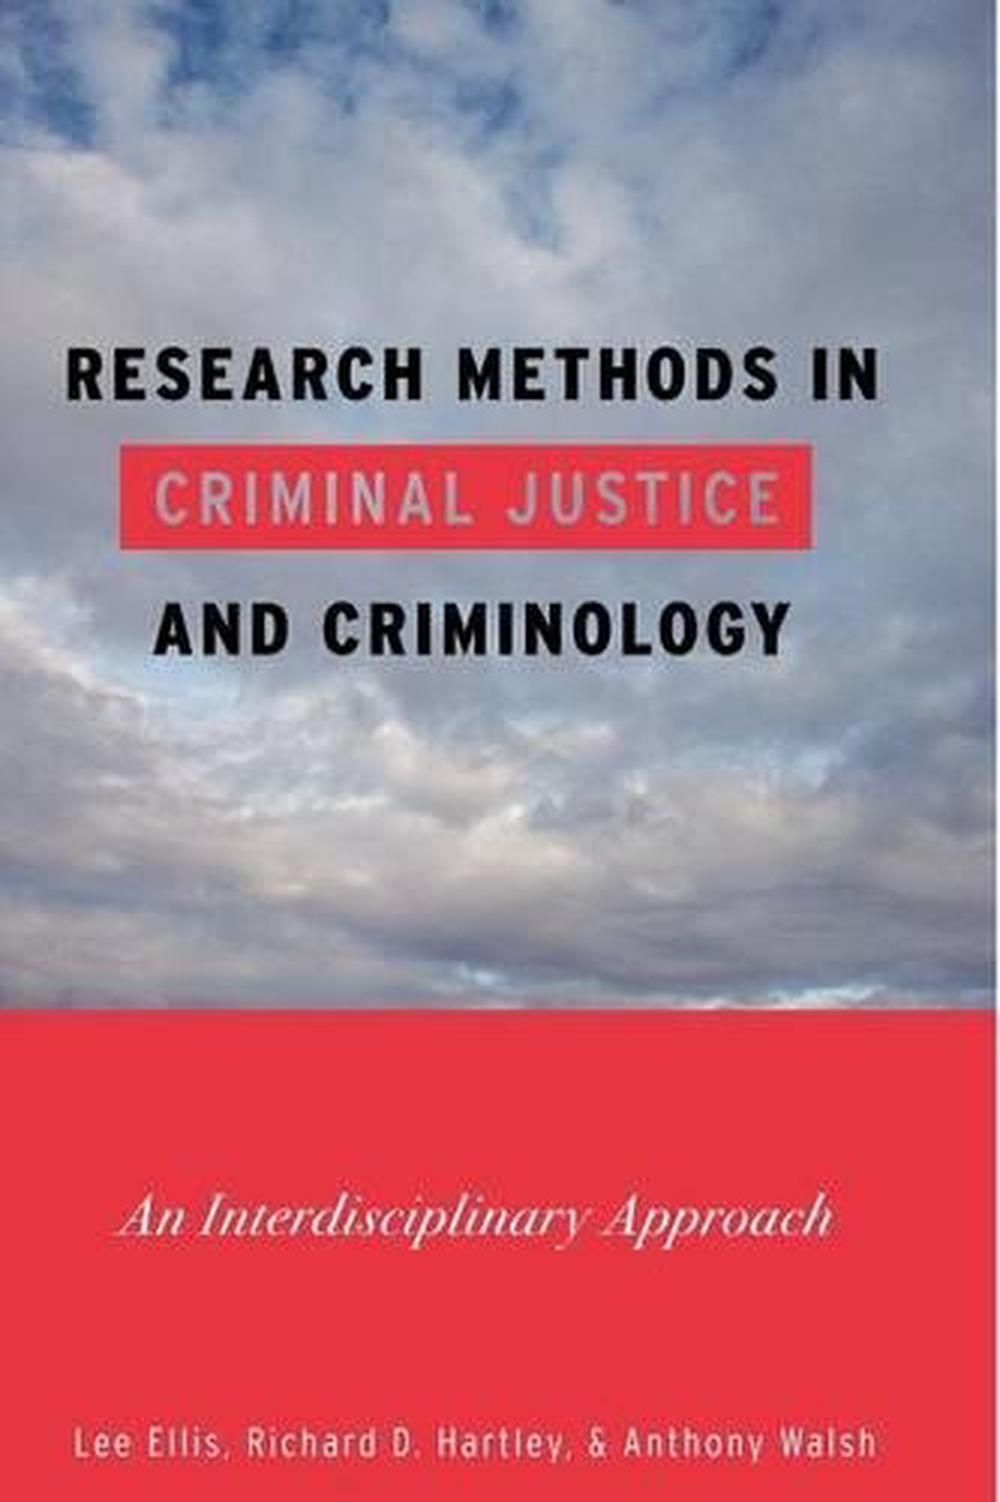 criminal justice research methods topics